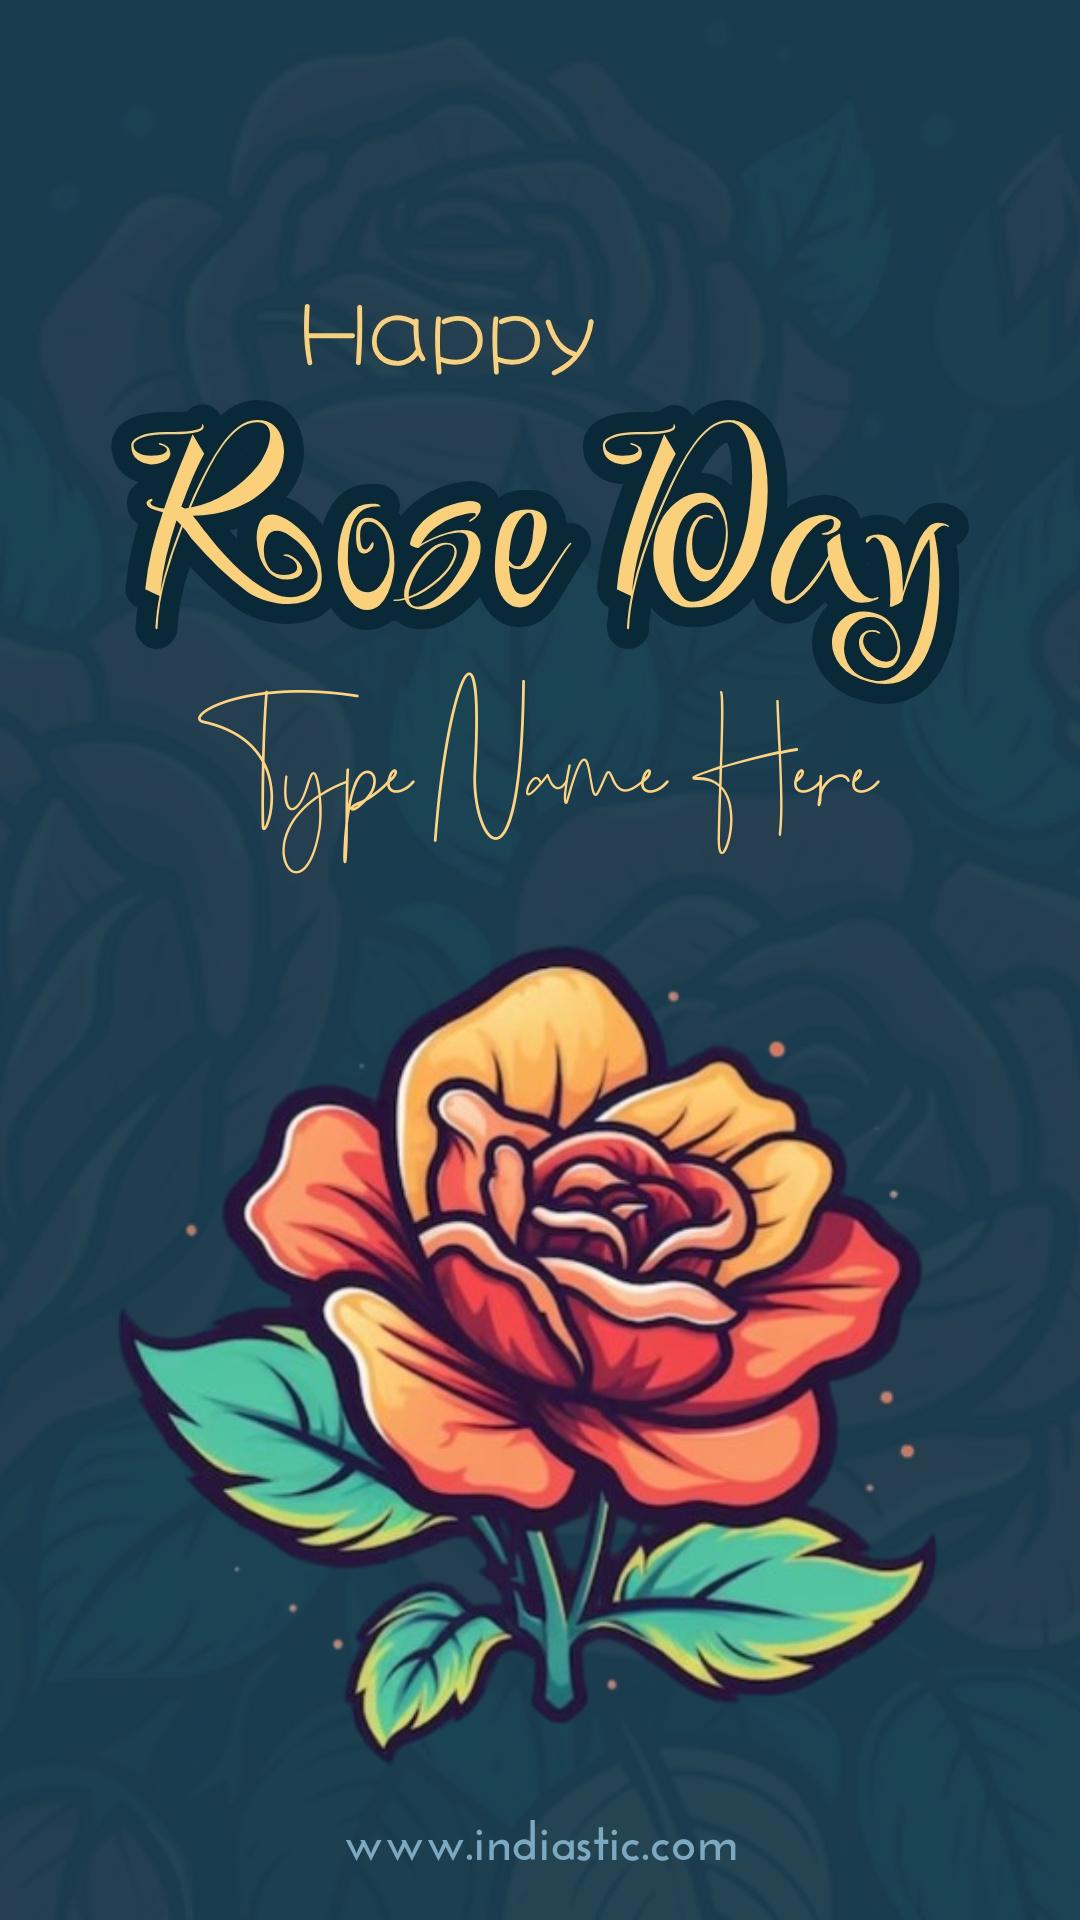 Happy rose day wish card